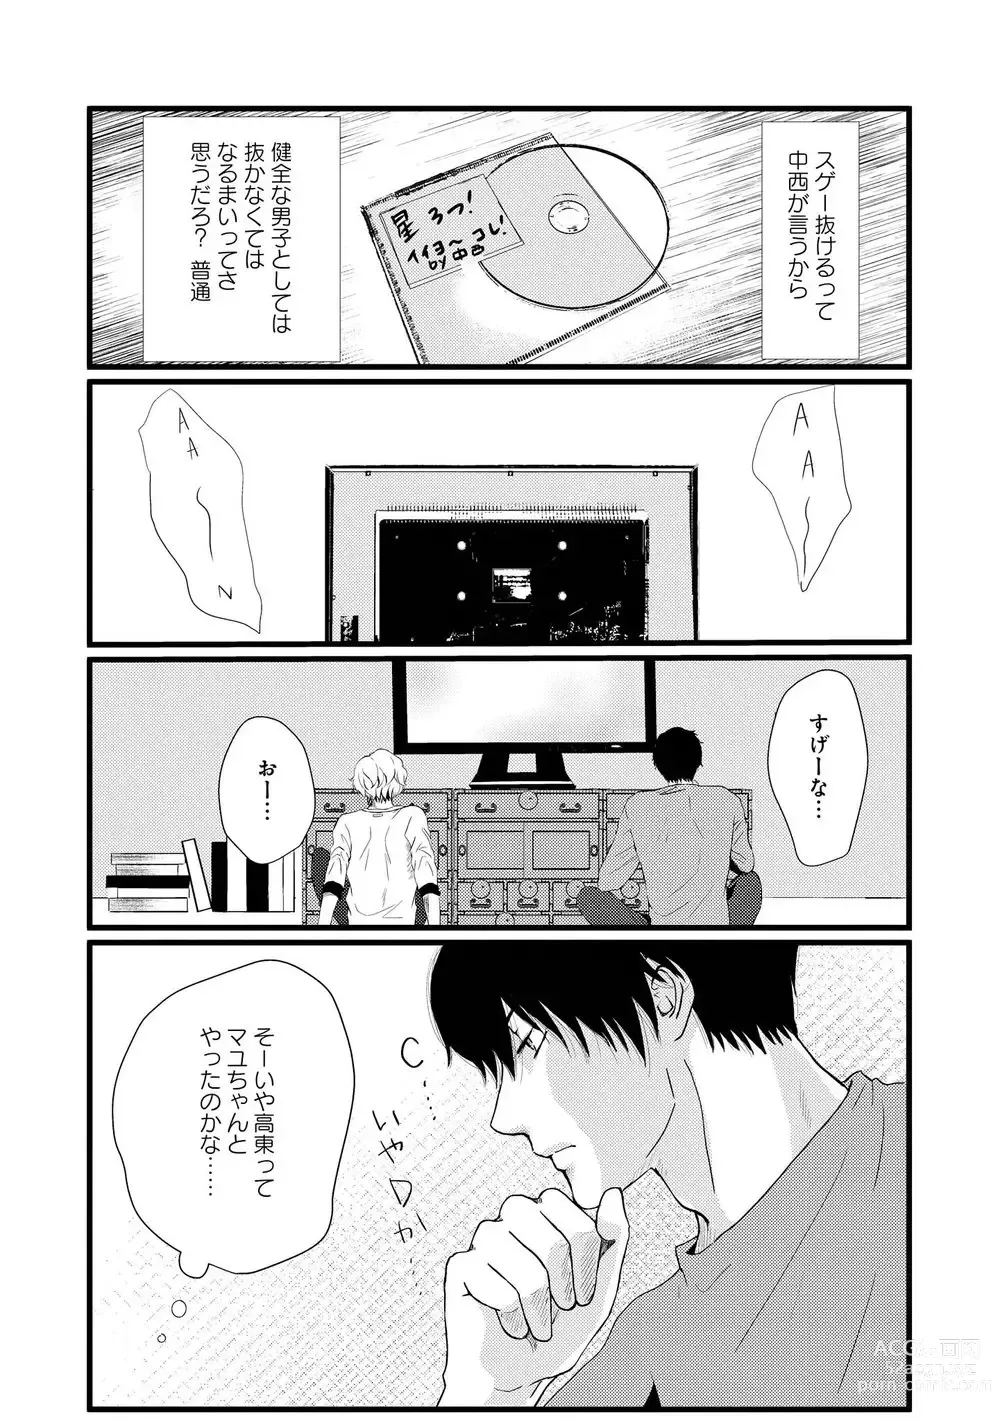 Page 9 of manga AHOERO